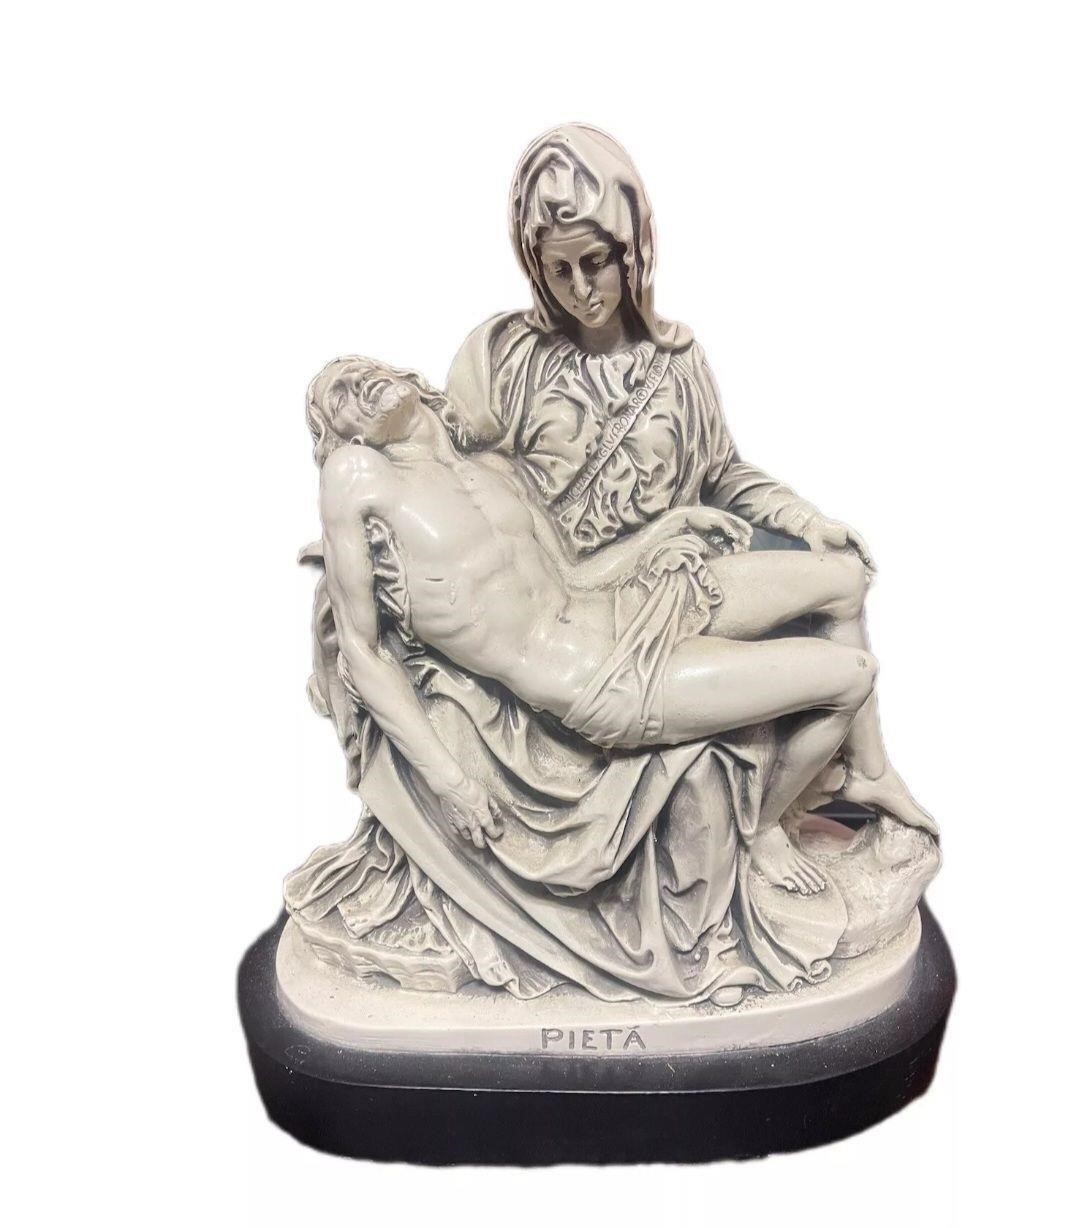 VTG Pieta Sculpture Jesus & Mary by Michelangelo